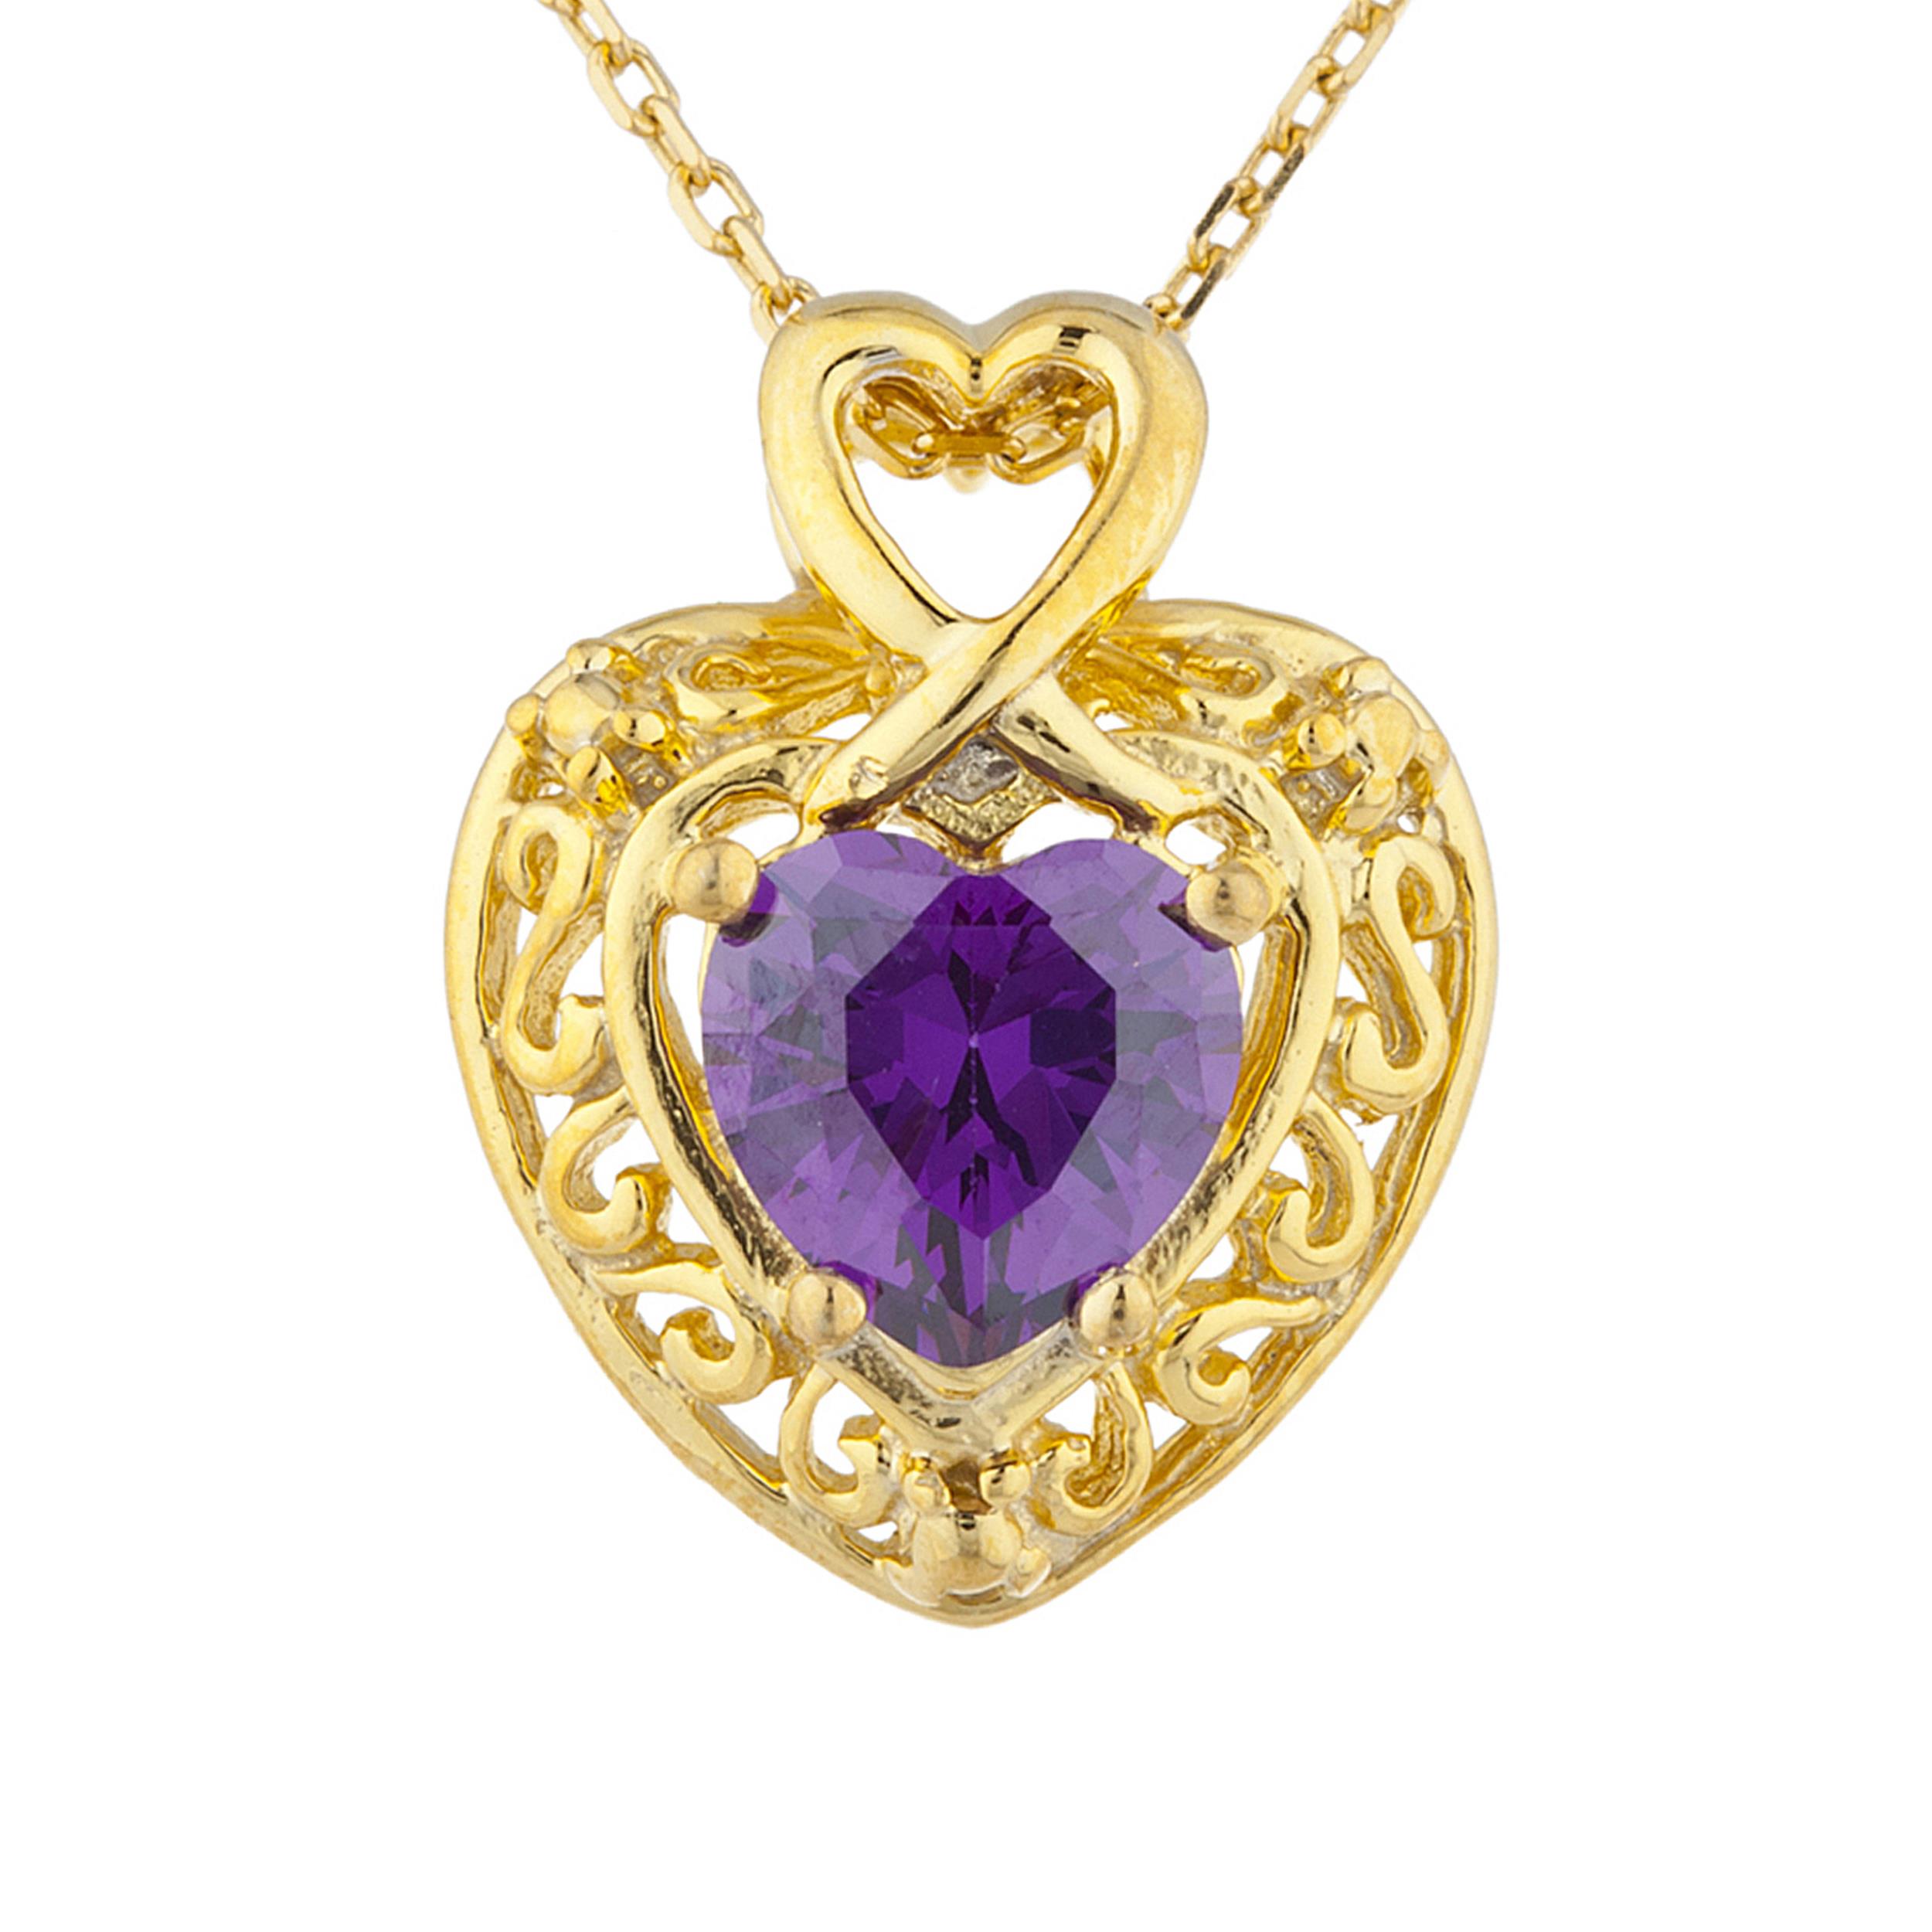 14Kt Gold Amethyst Heart Design Pendant Necklace | eBay